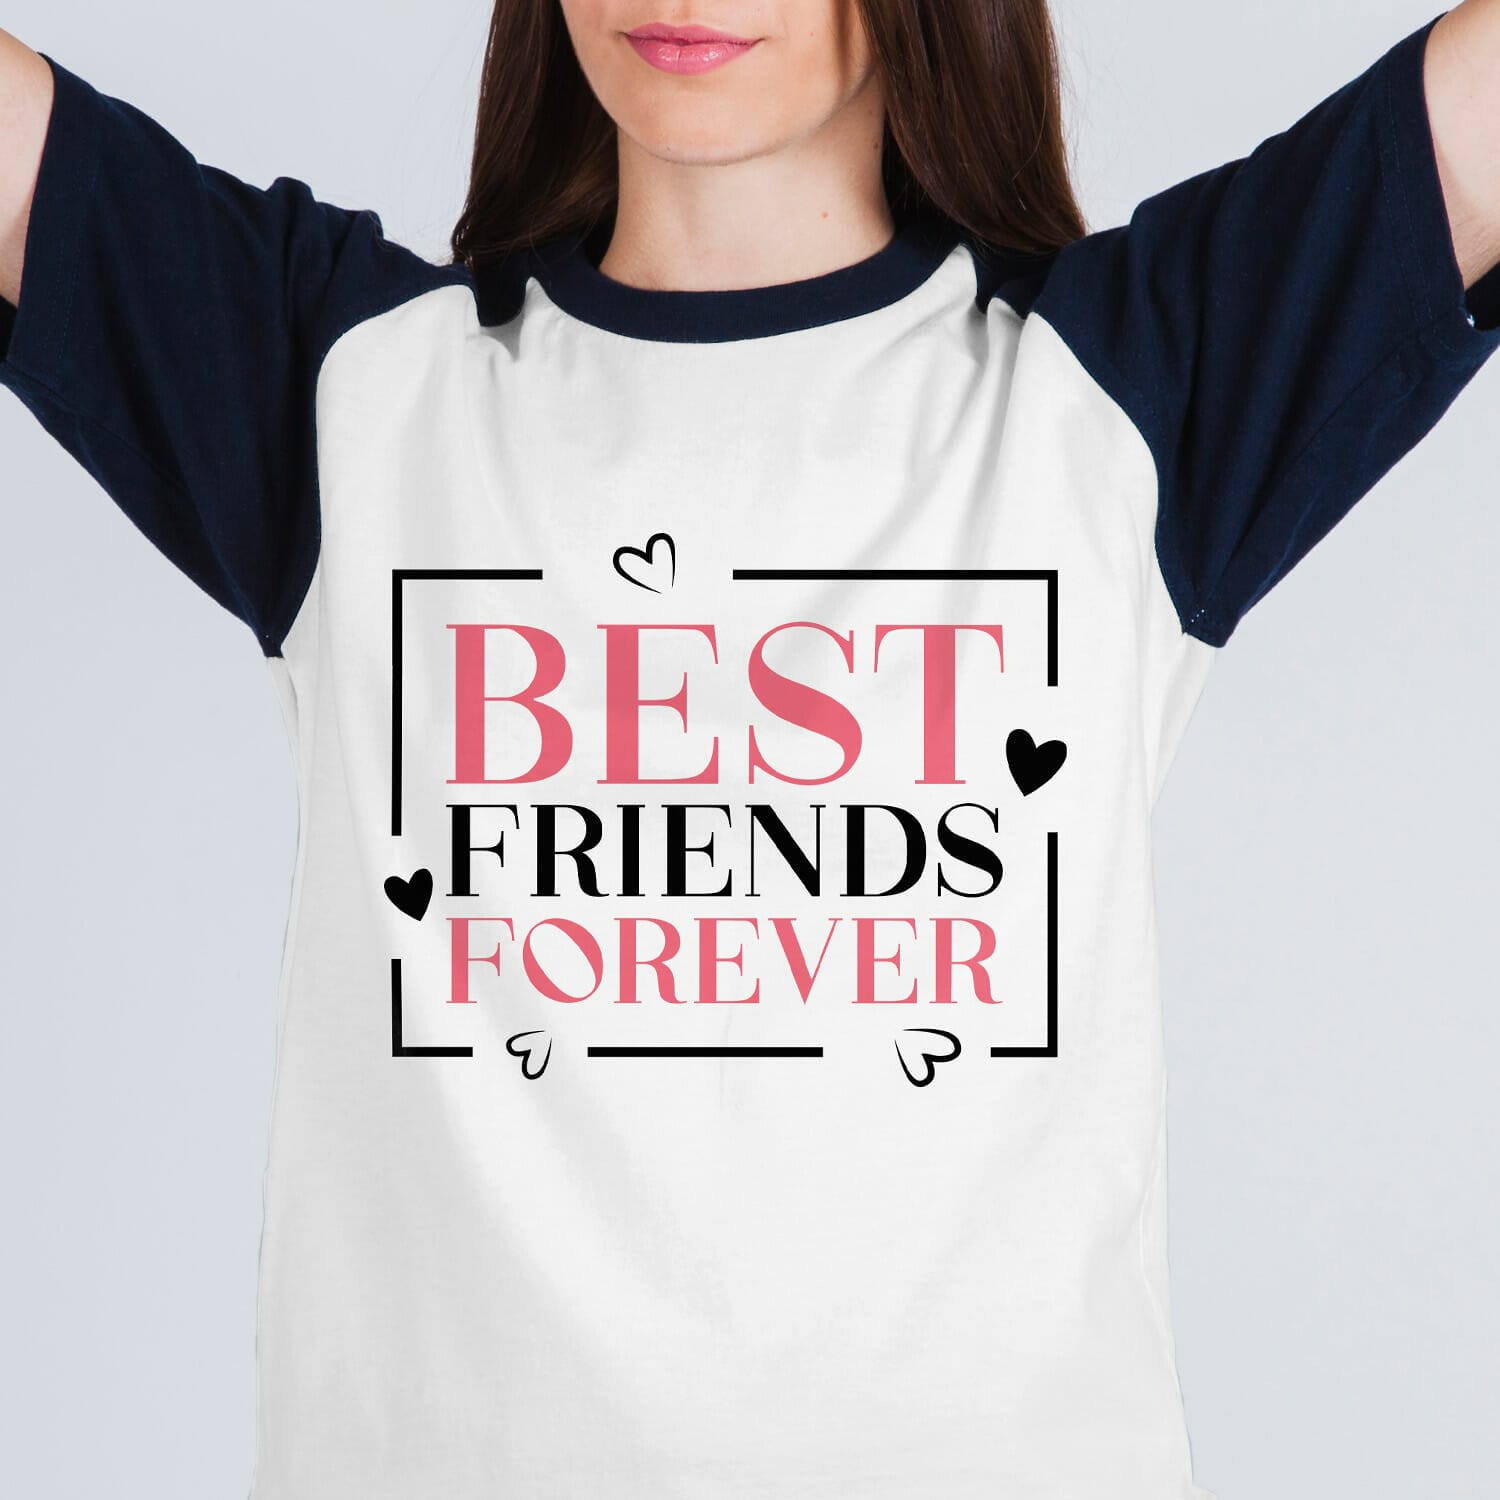 Best friends forever tshirt design